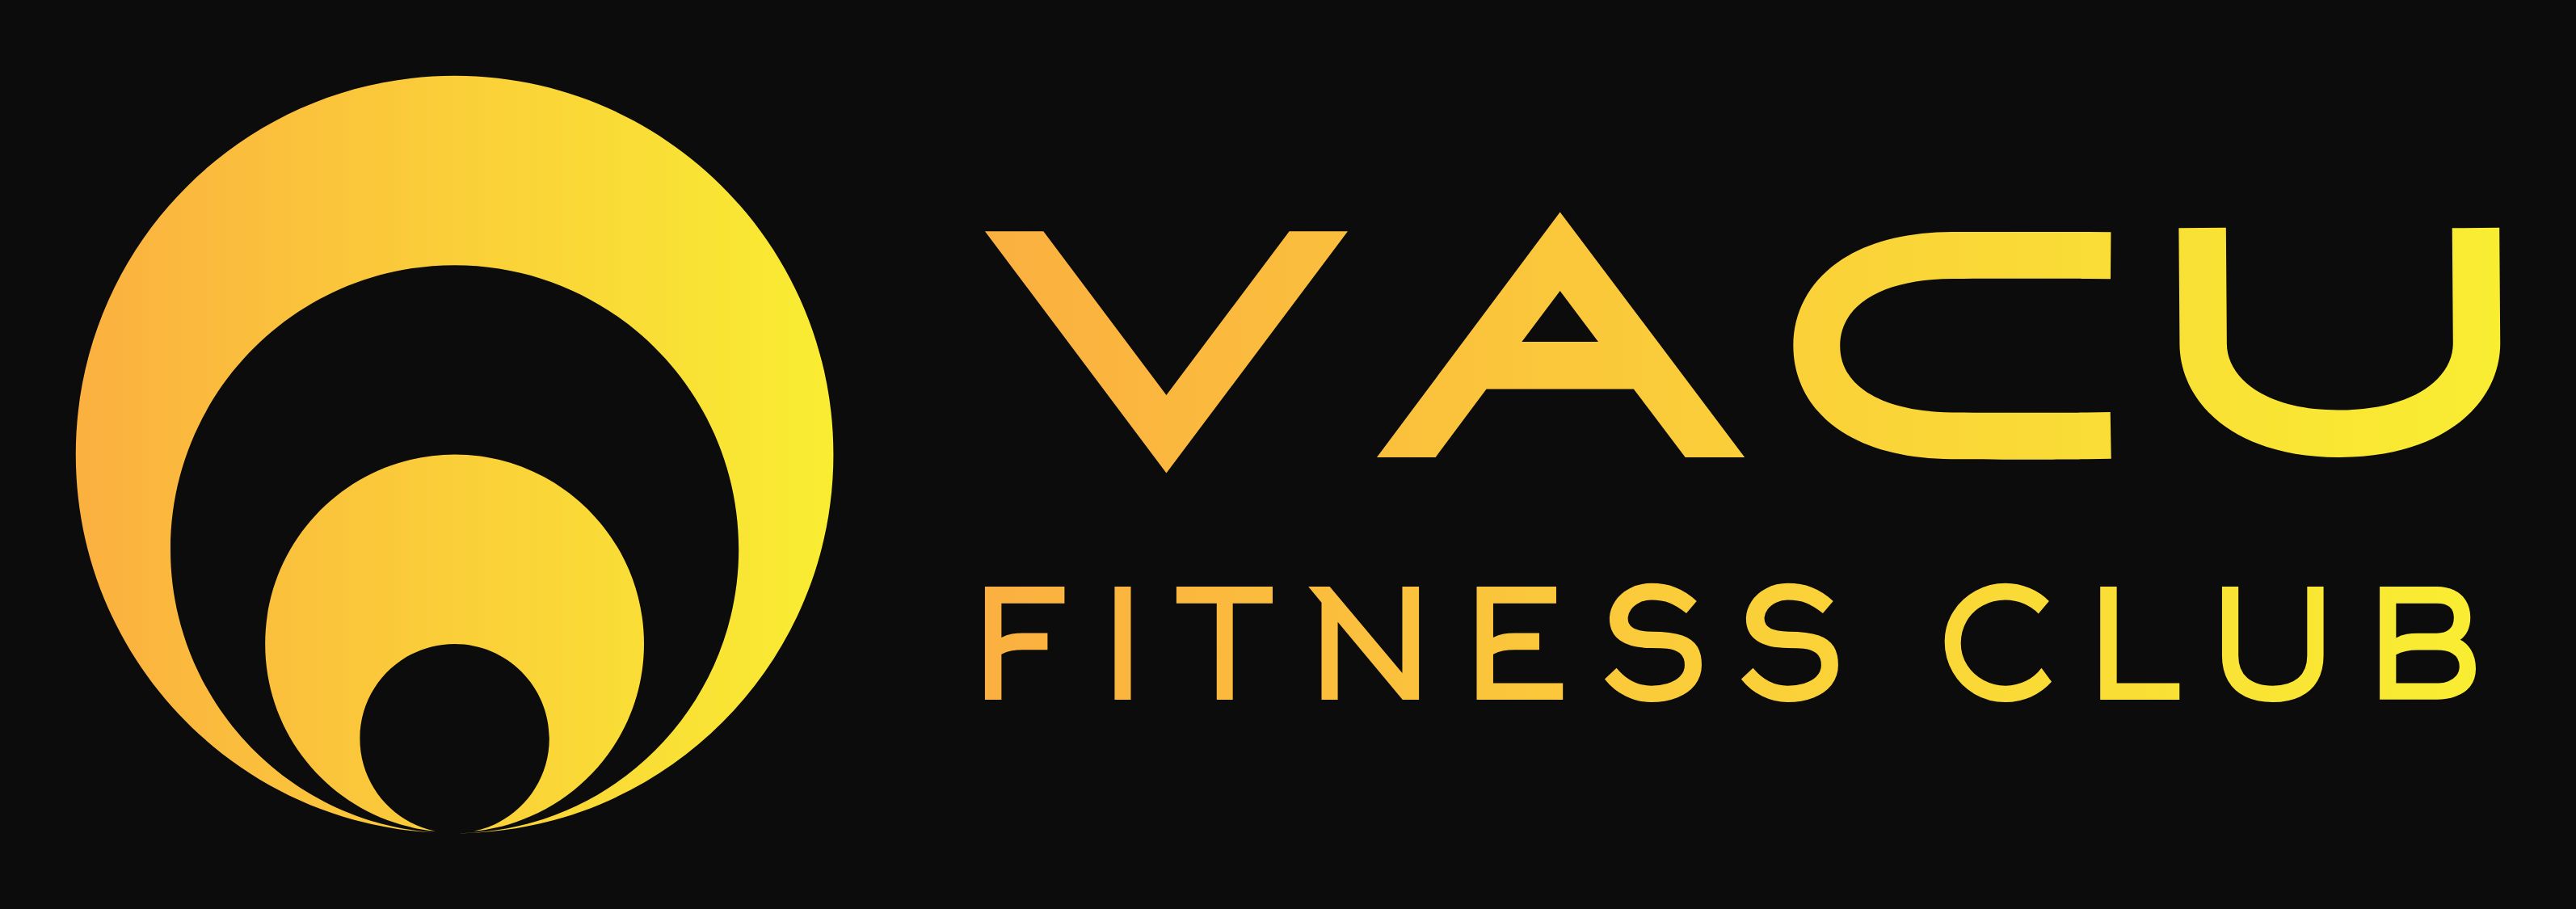 vacu fitness logo